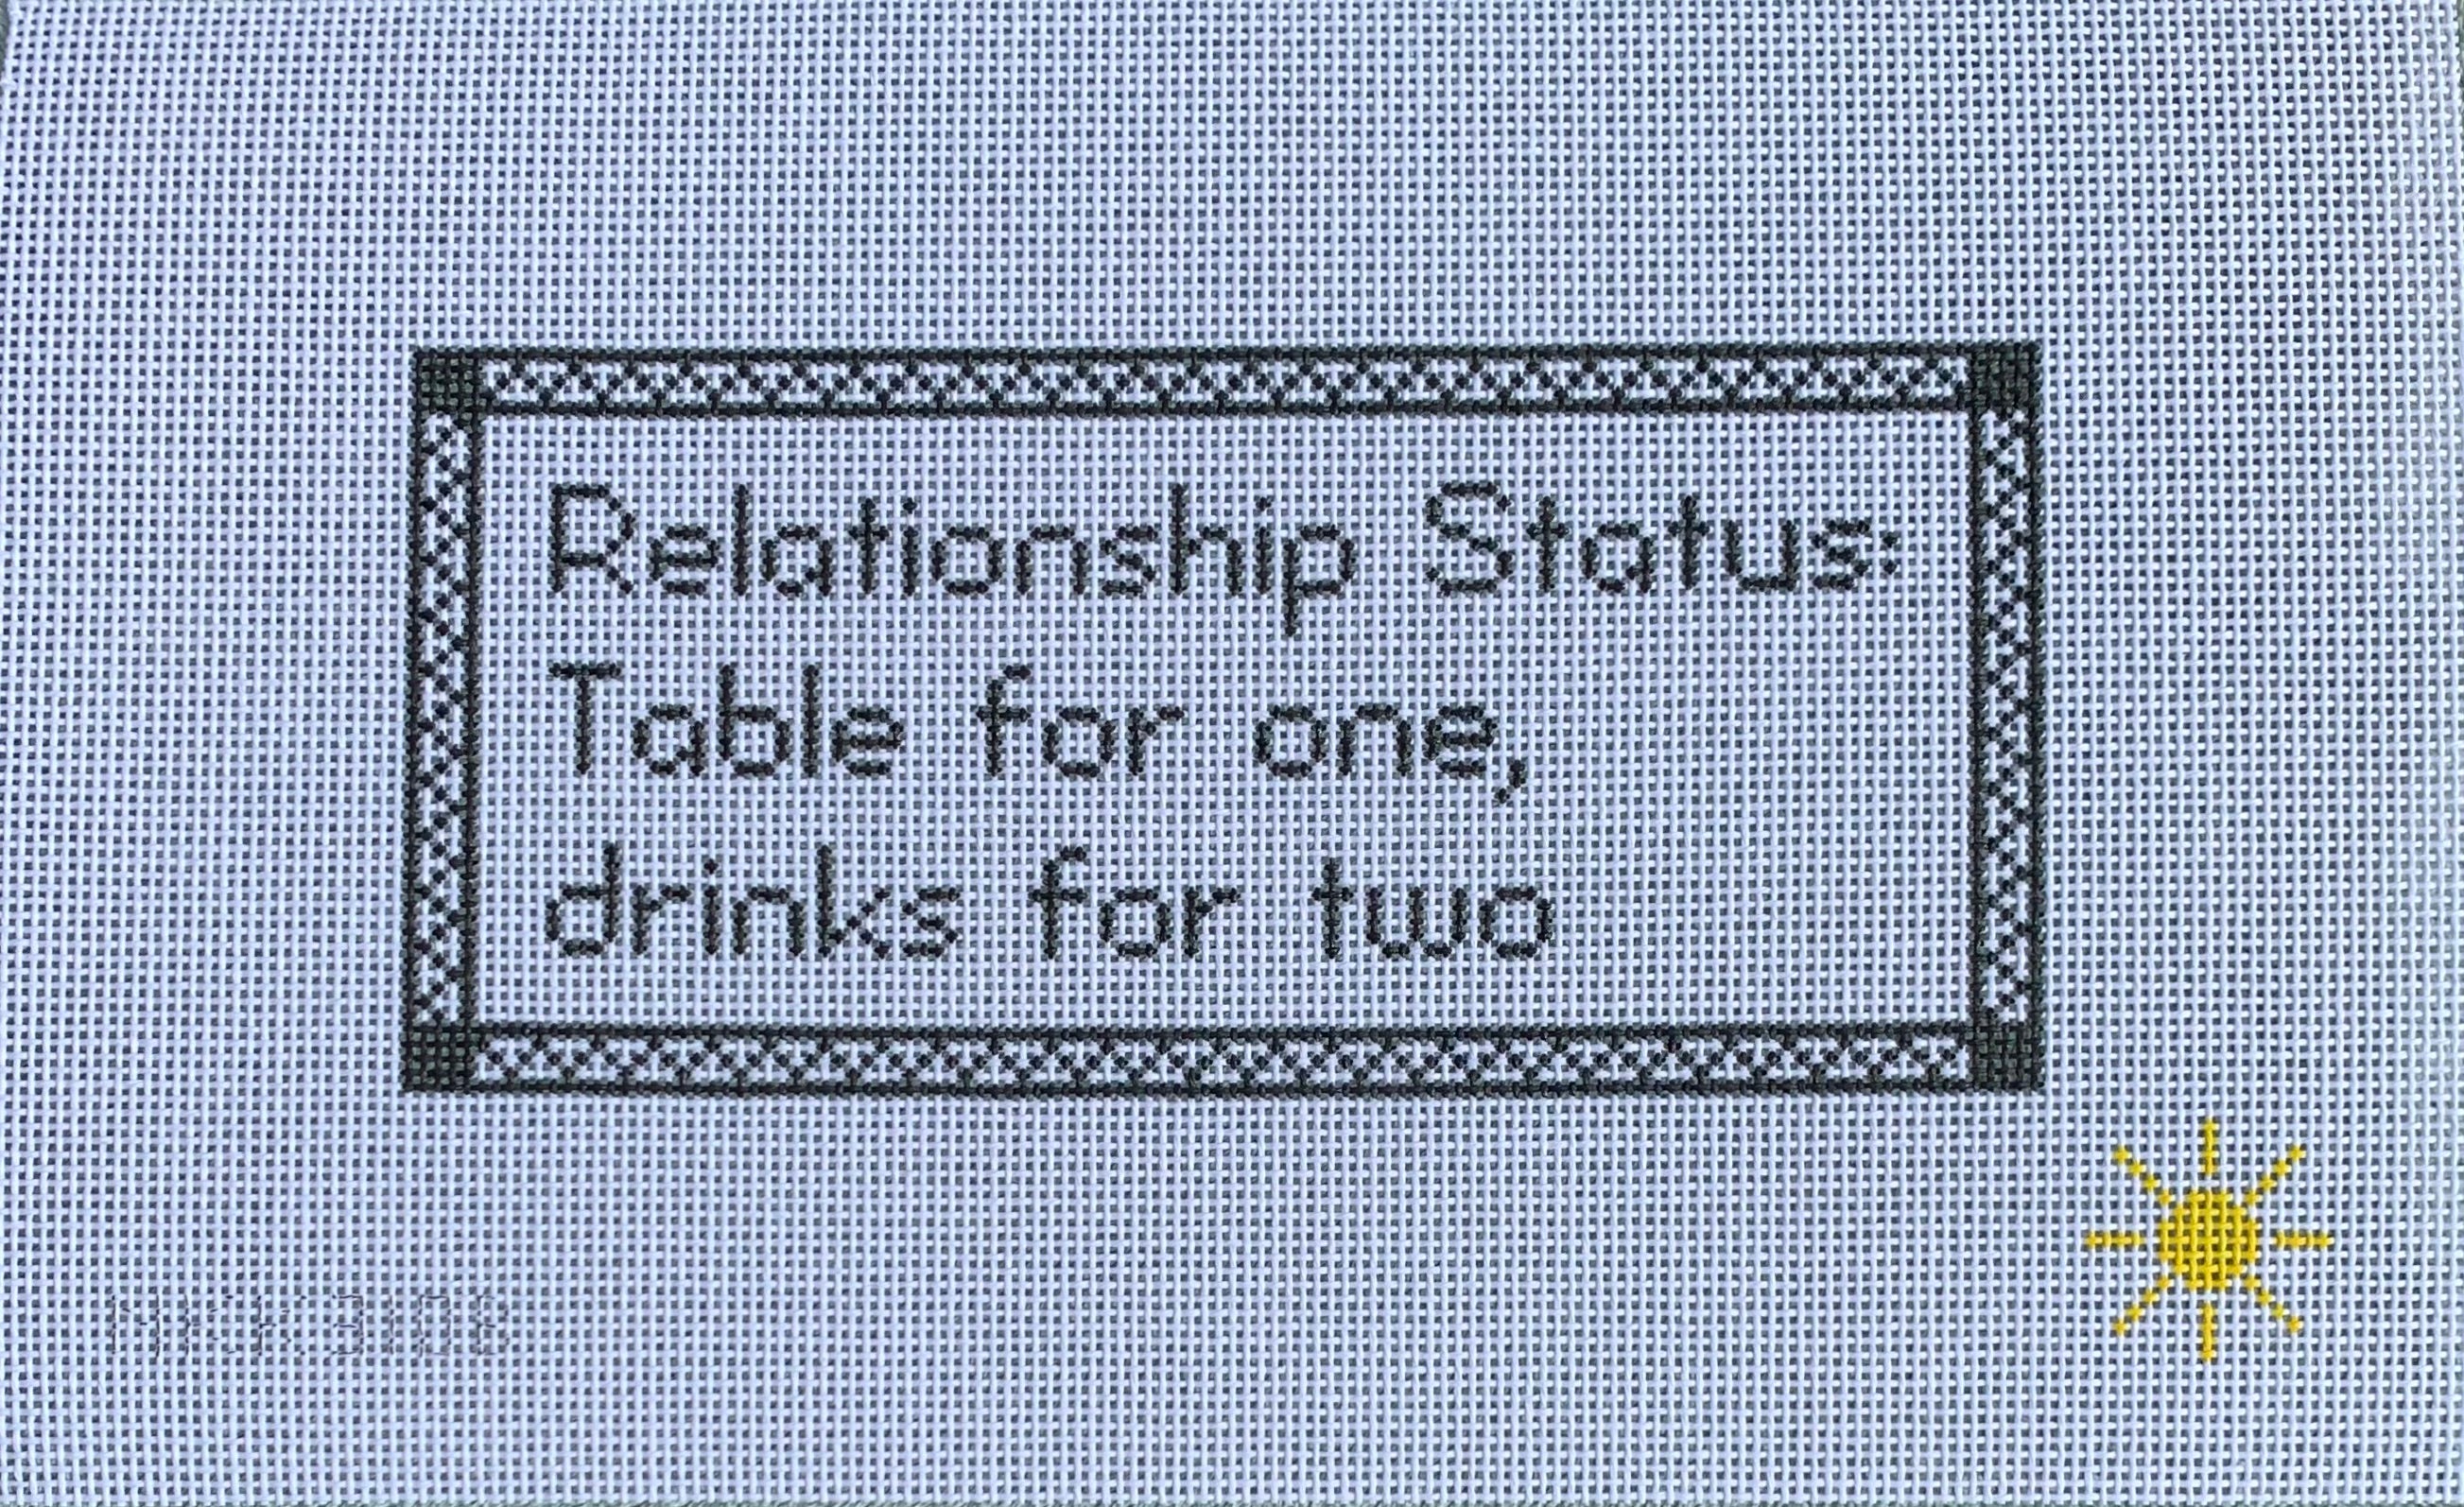 Relationship Status - Table